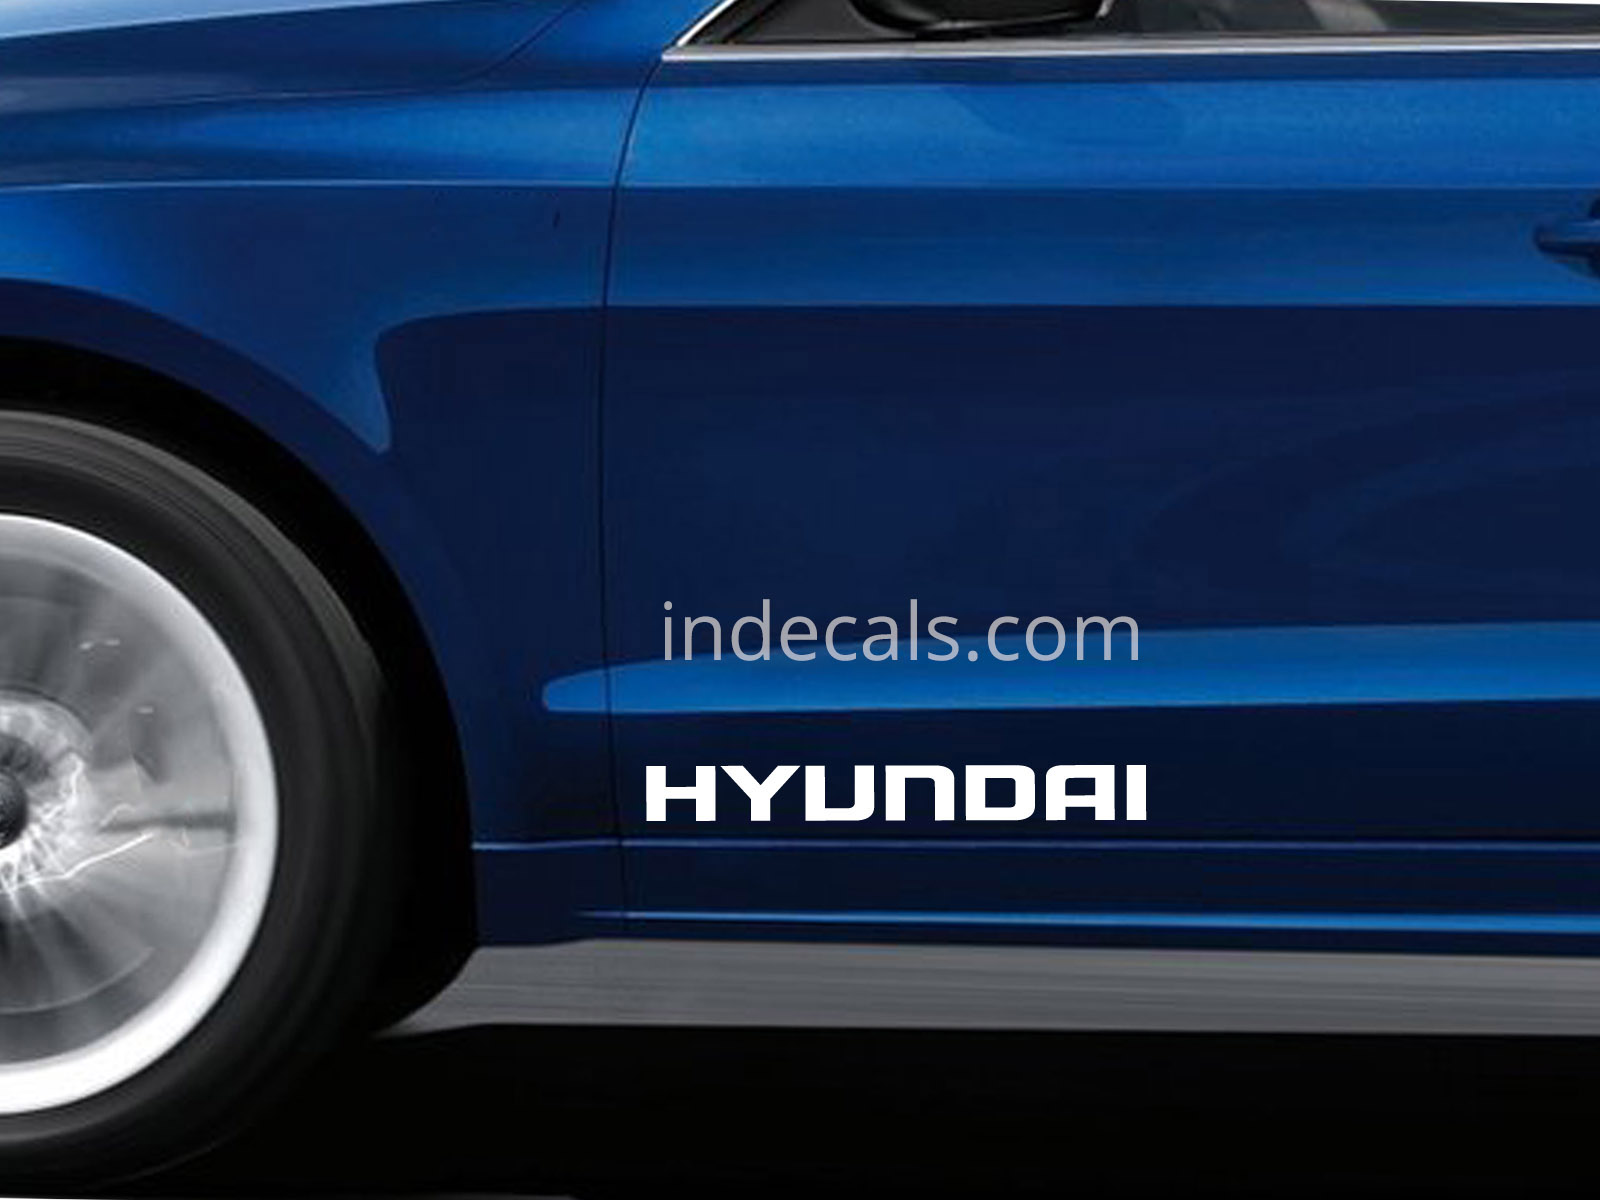 2 x Hyundai Stickers for Doors Large - White